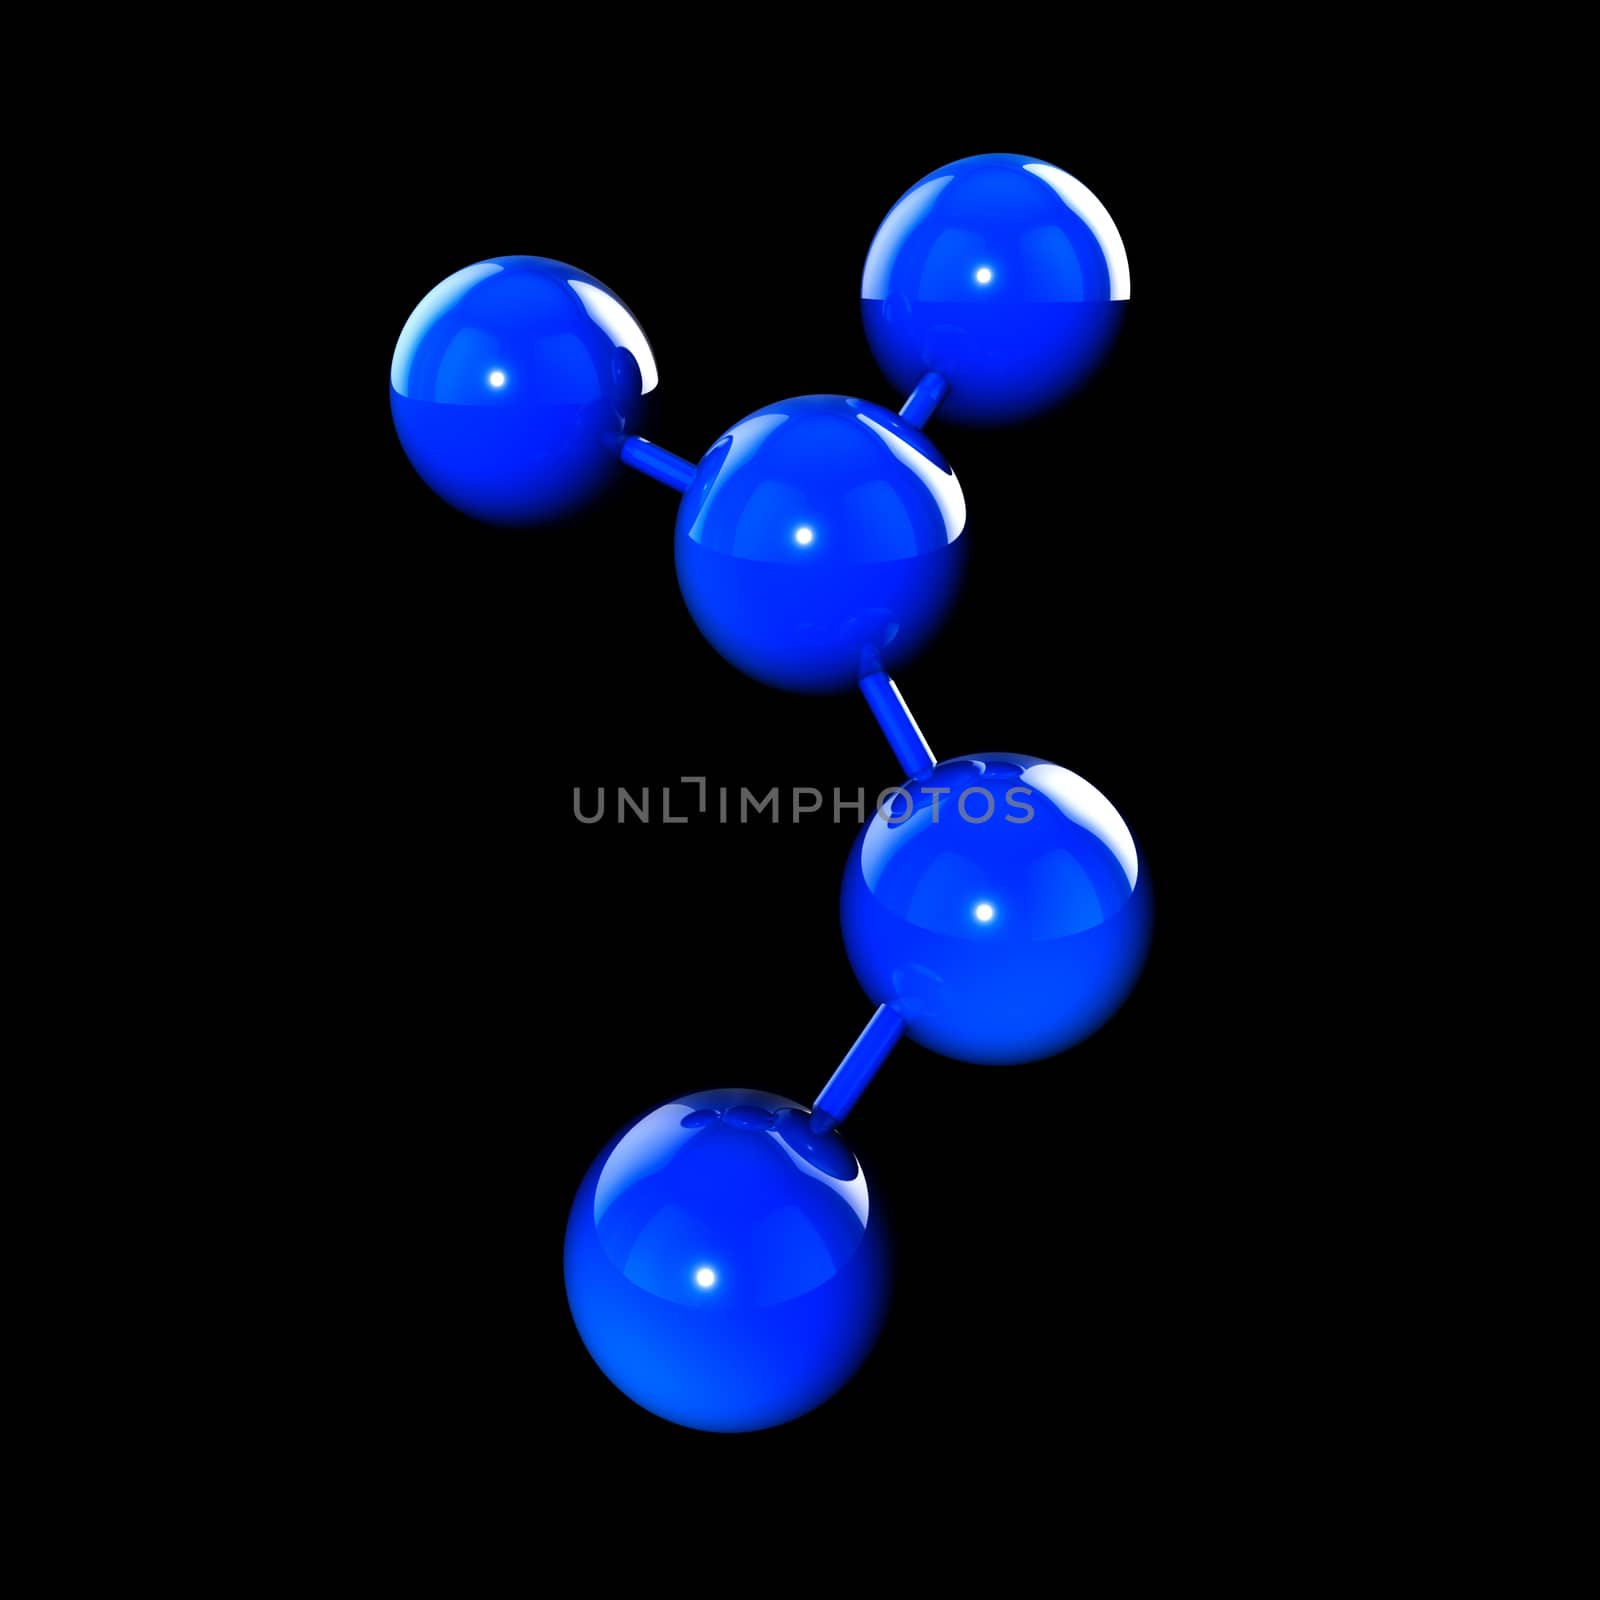 abstract bule molecule or atom for Science or medical black background 3Drendering 